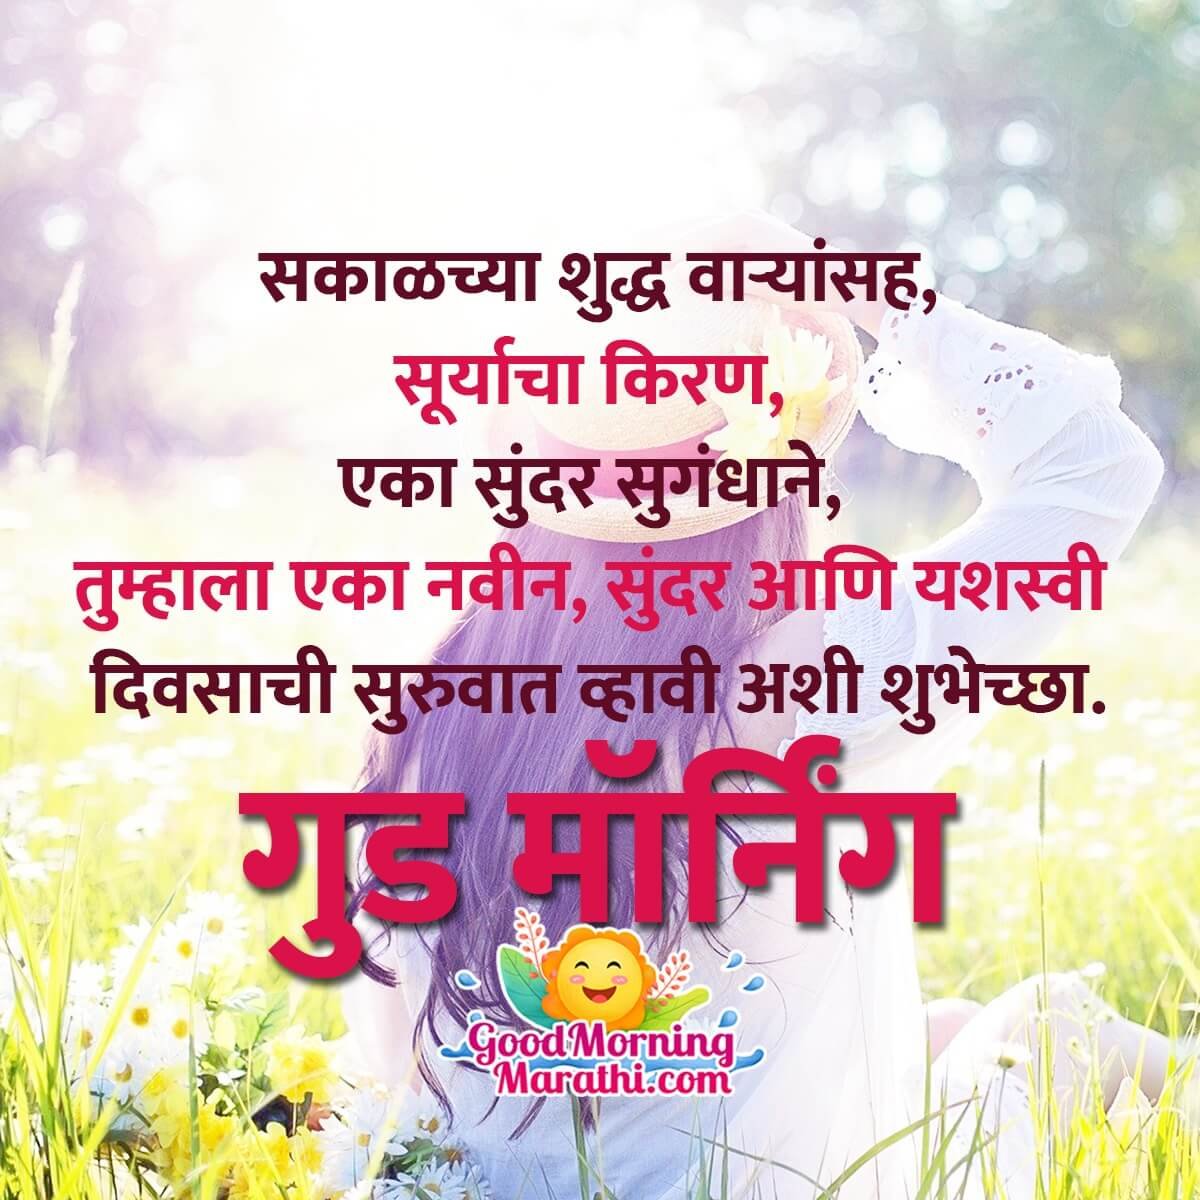 Good Morning Marathi Shayari Image